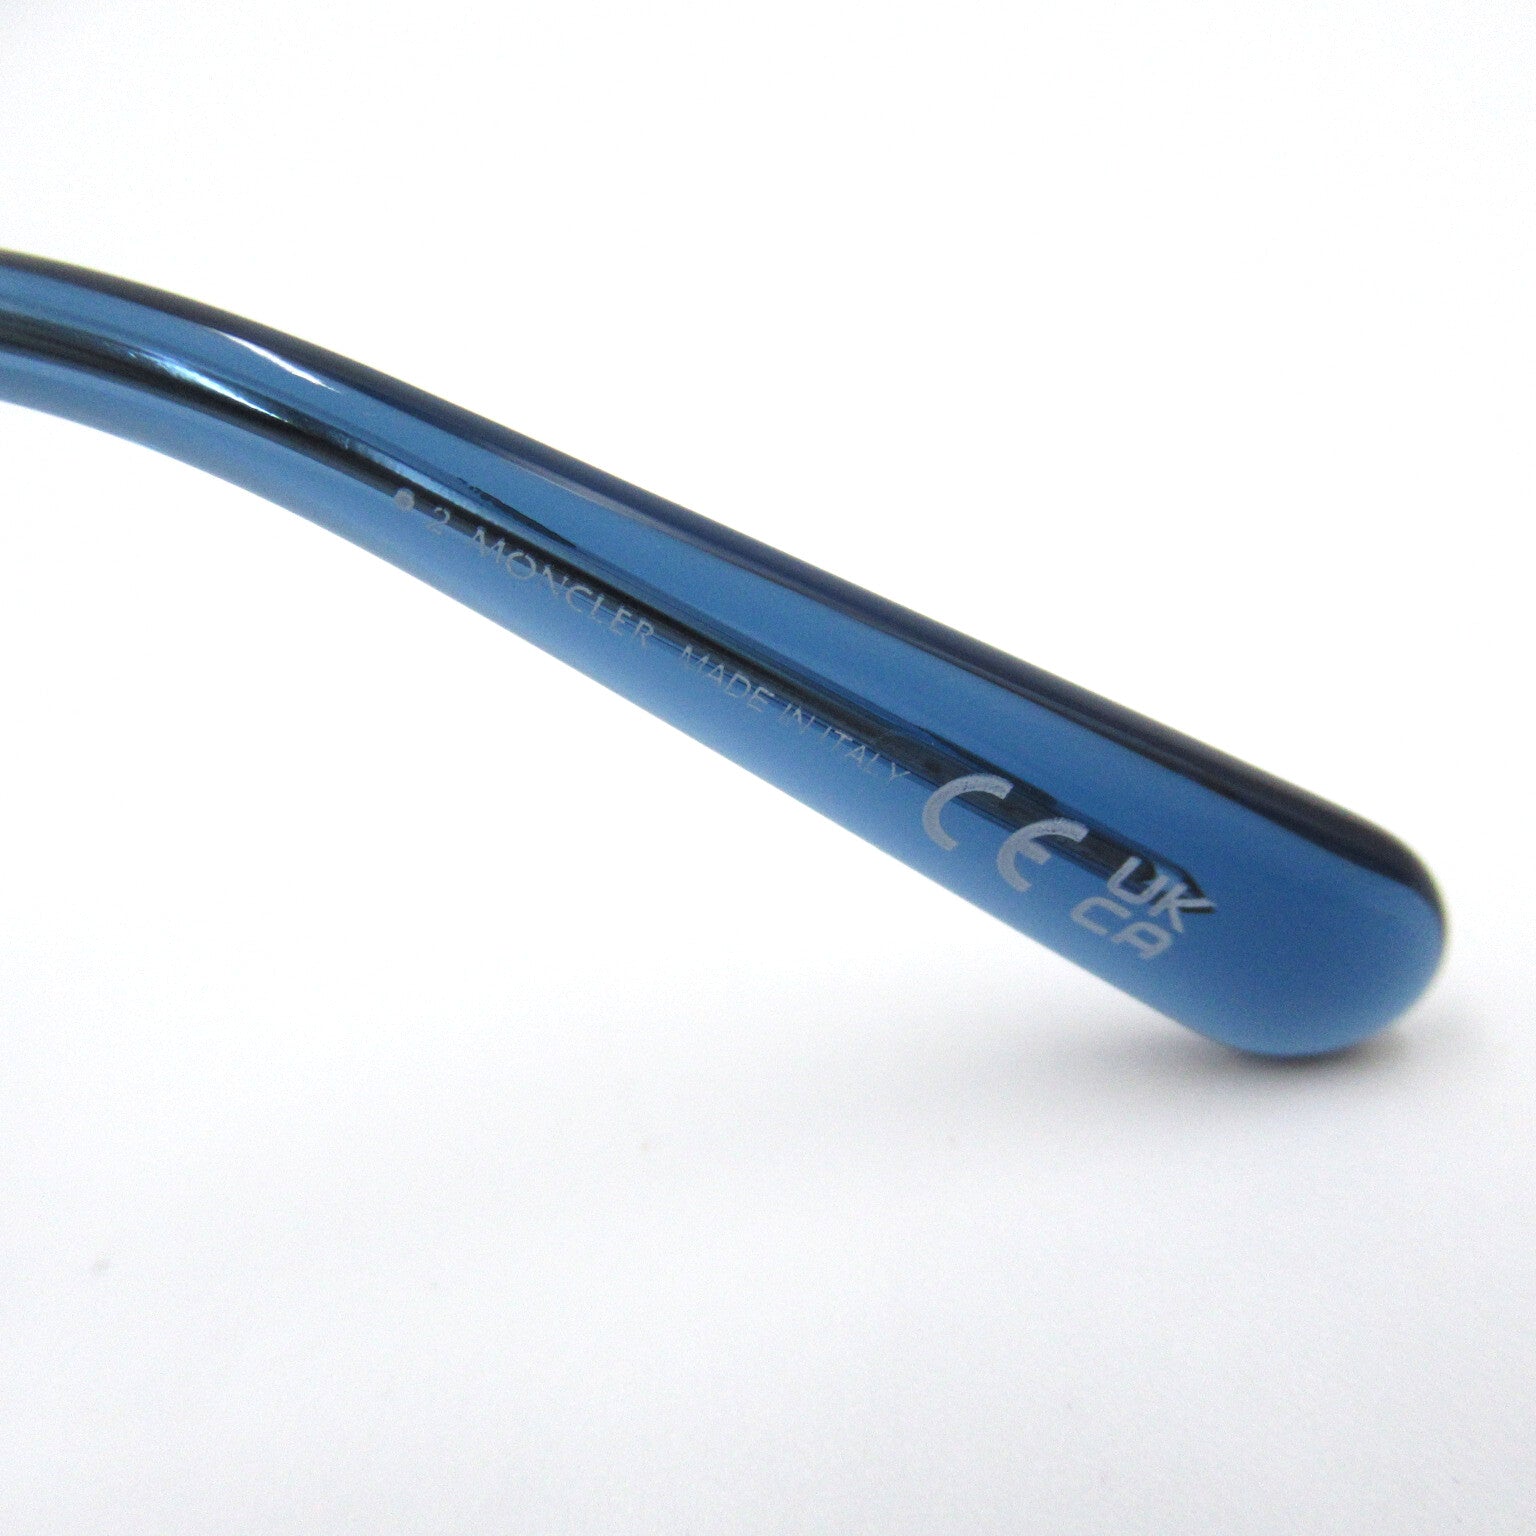 Moncler Moncler S Glasses   Metal  Blue 5204H 014(48)